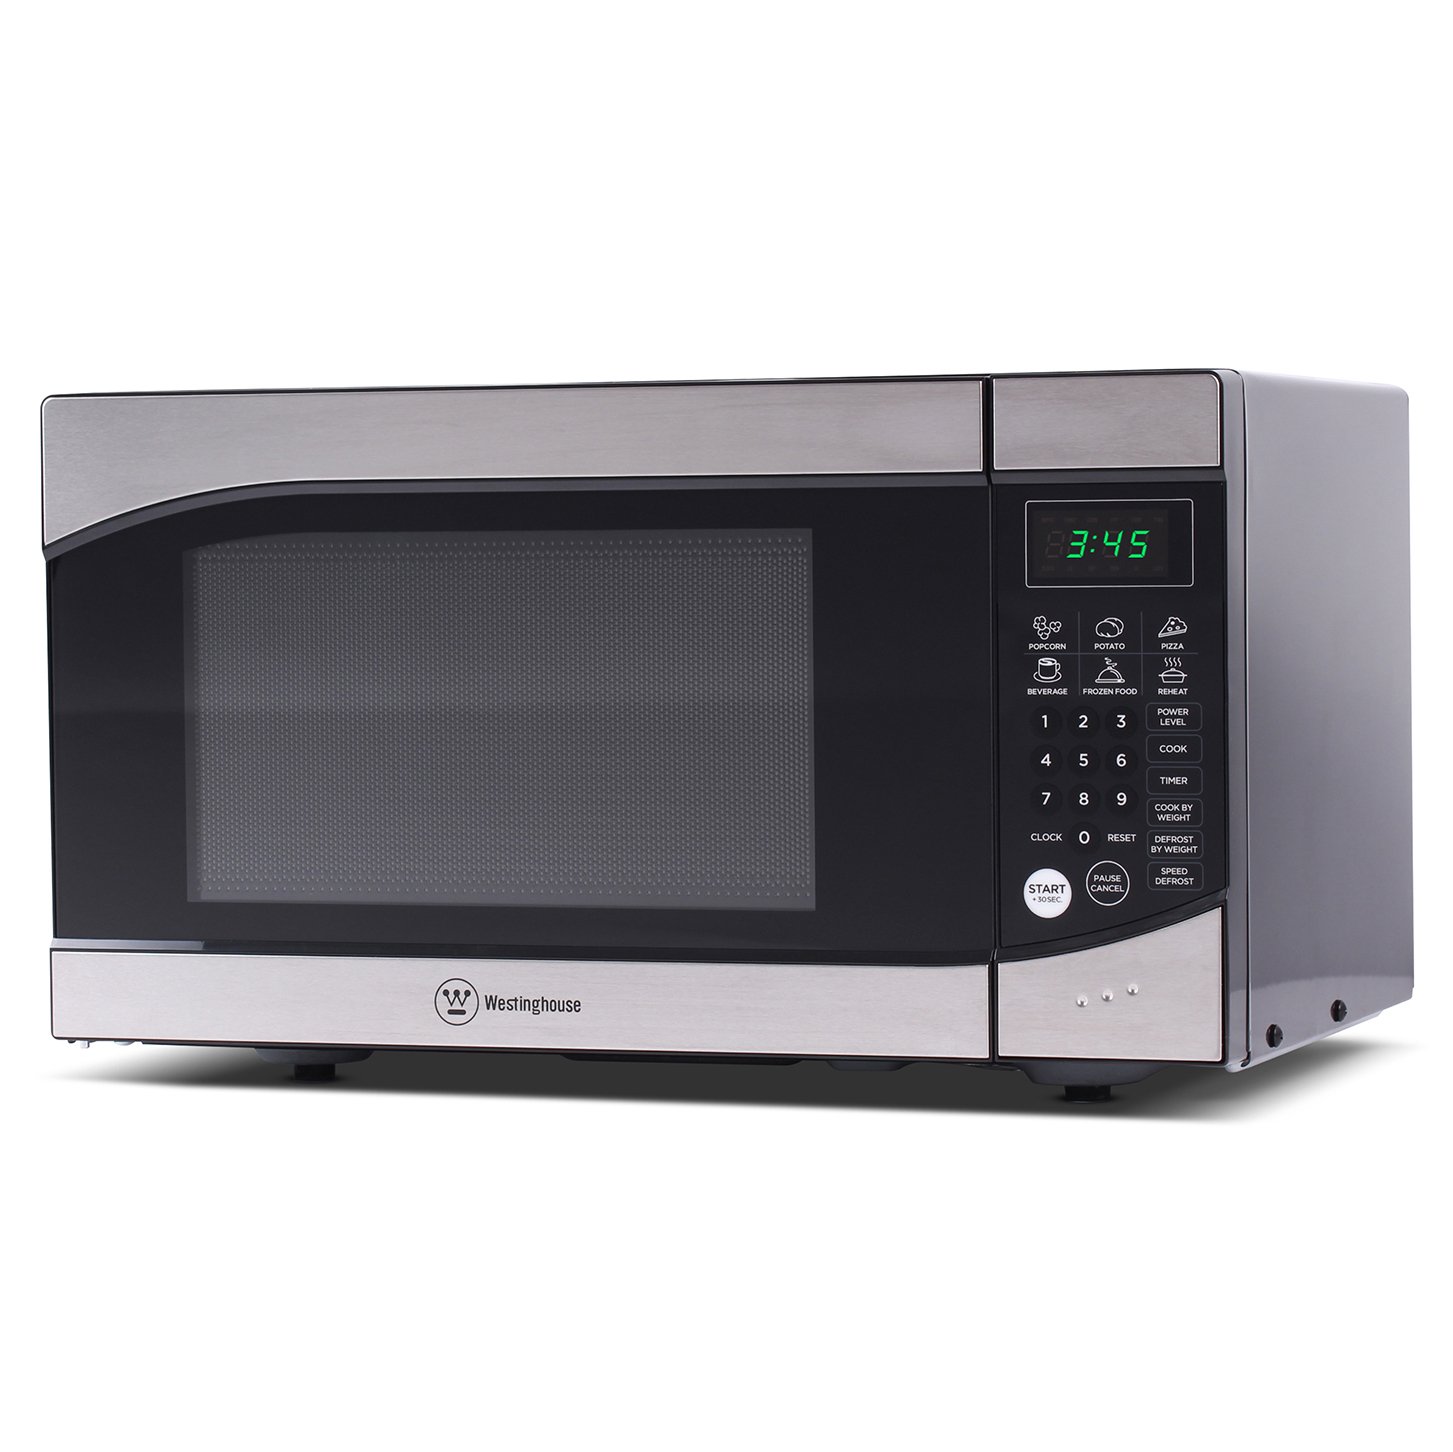 Westinghouse WM009 900 Watt Countertop Microwave Oven